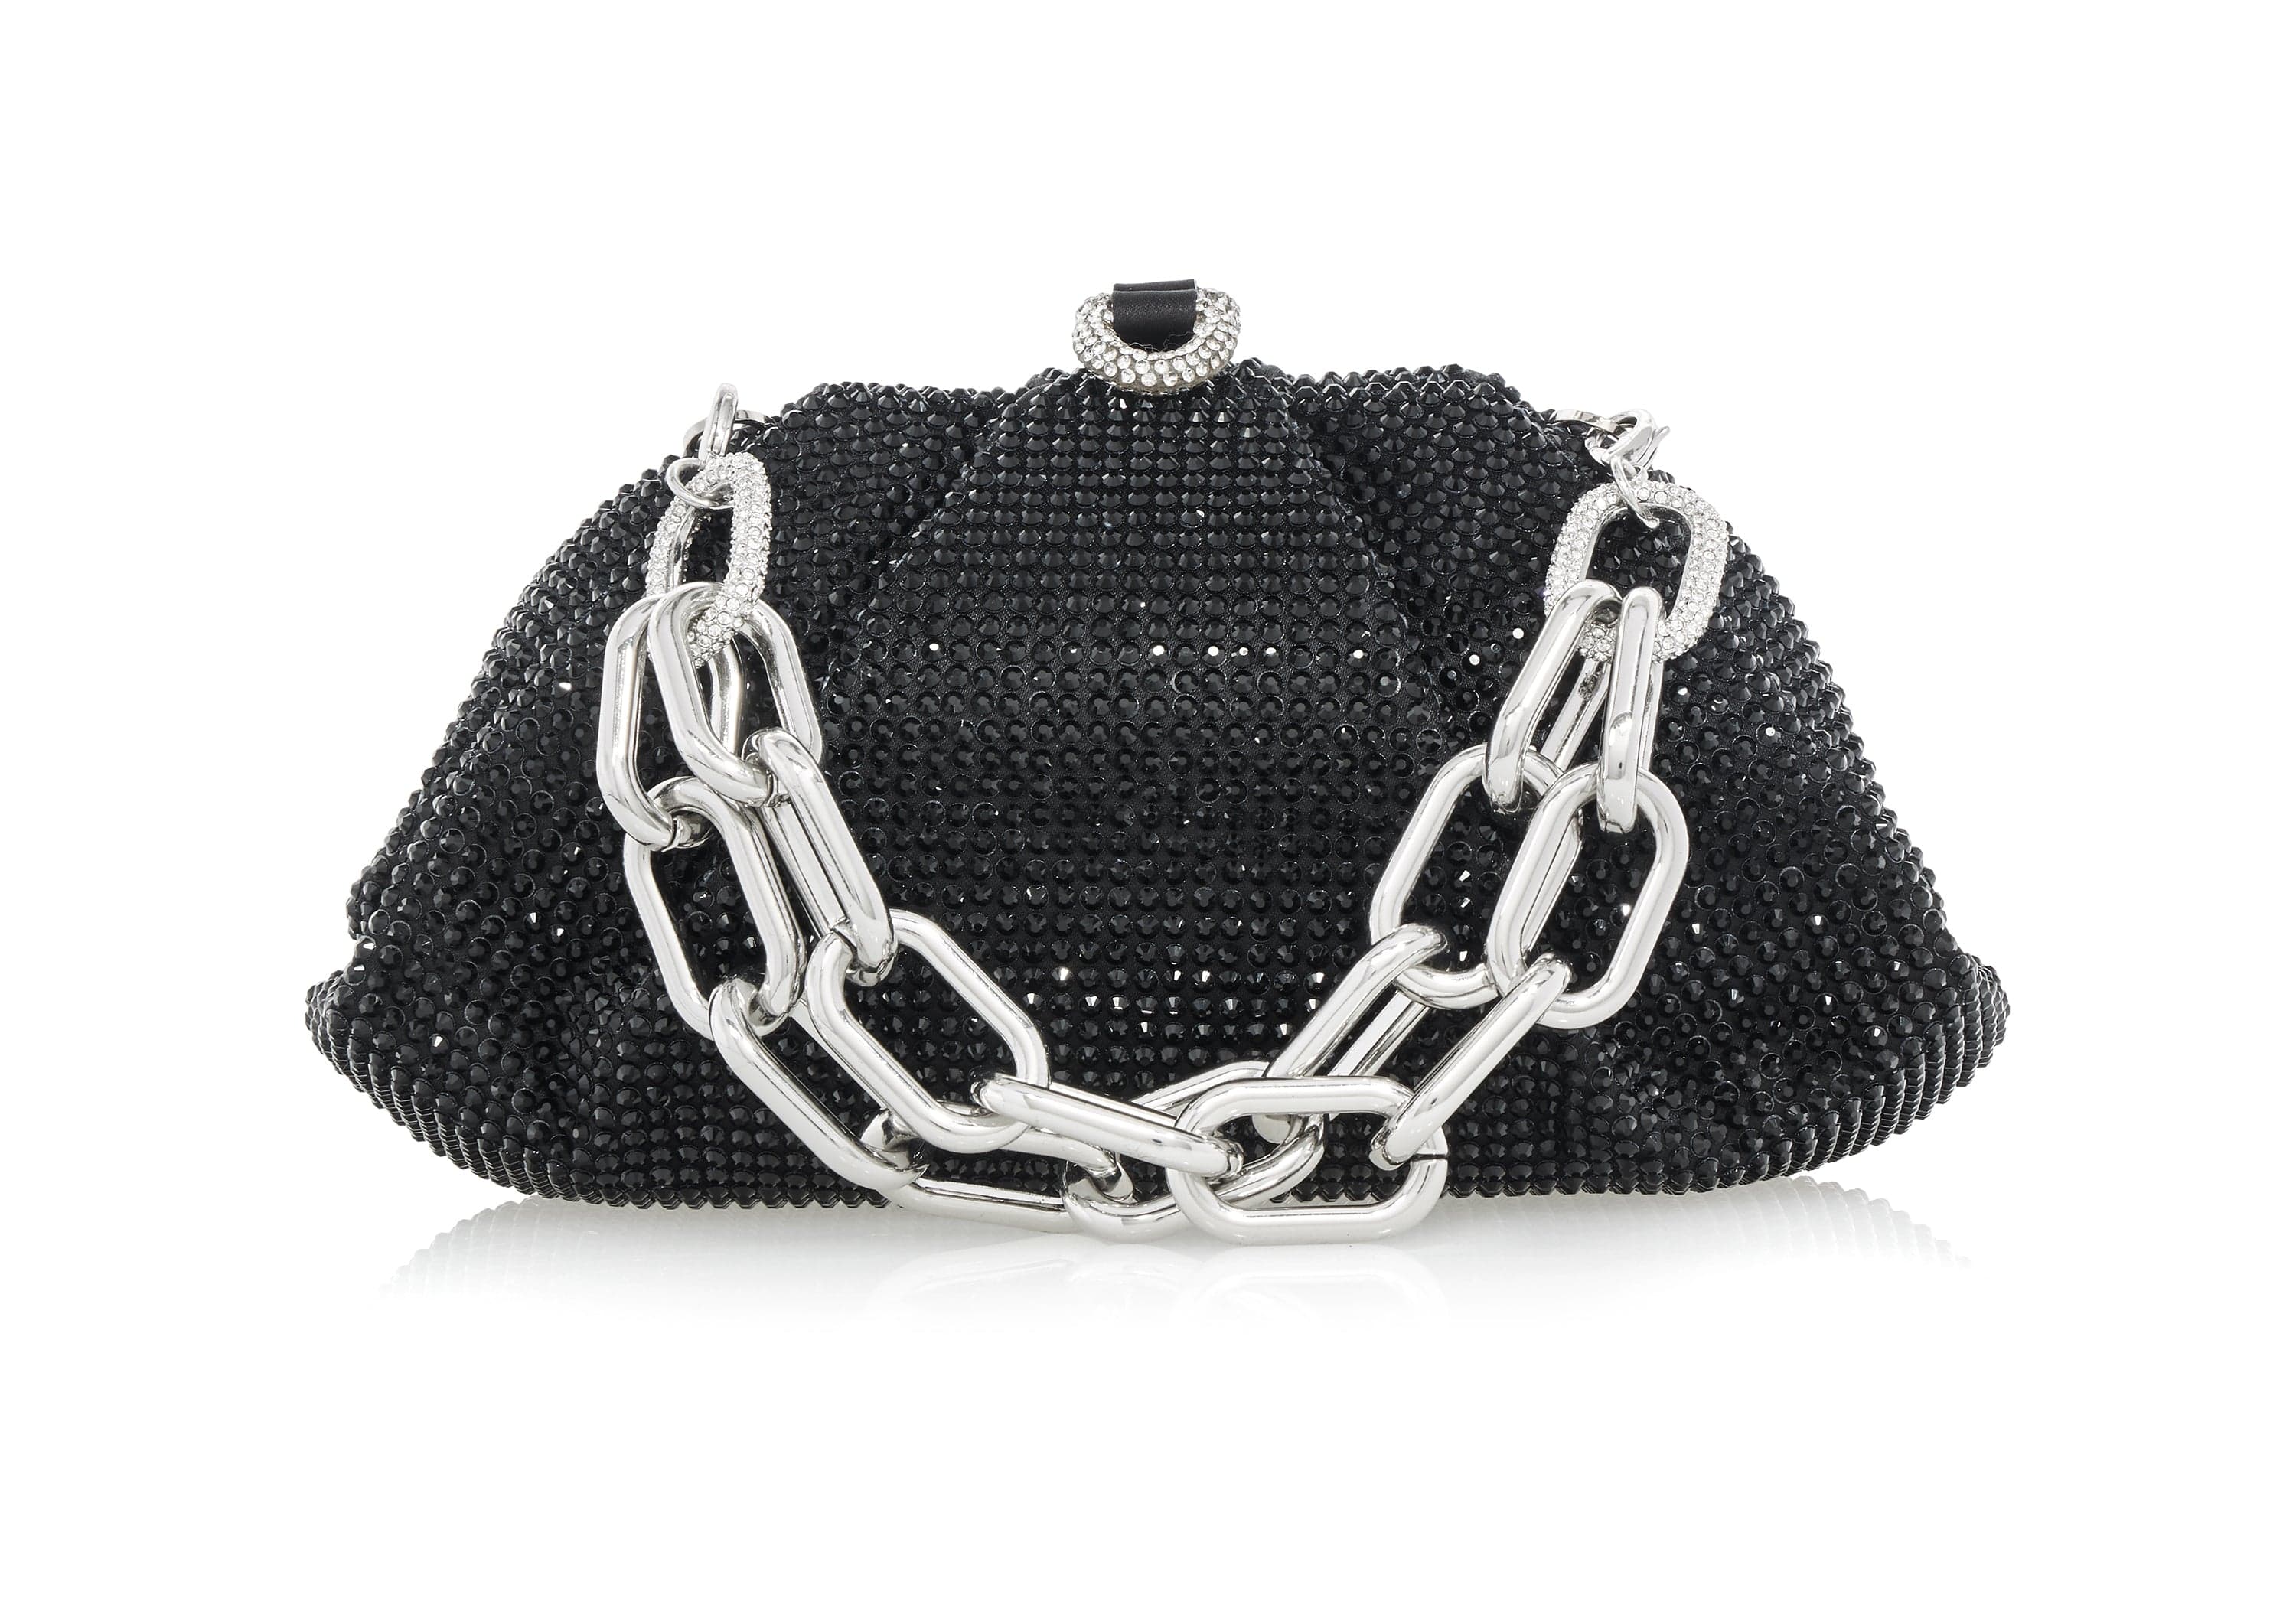 Bijoux Terner Womans Black Satin Beaded Clutch Evening Bag Purse Beaded  Handles